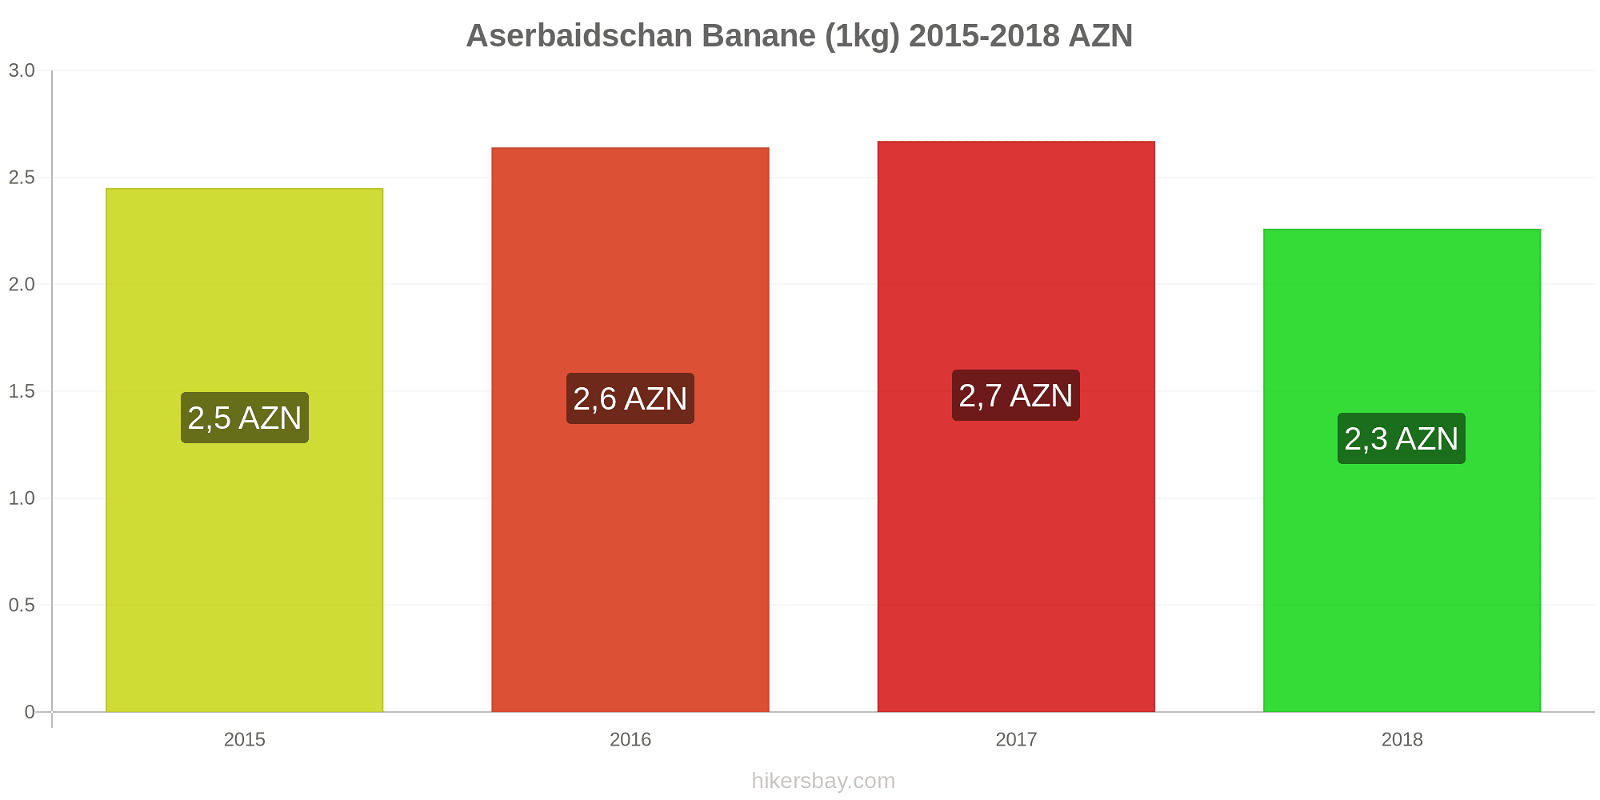 Aserbaidschan Preisänderungen Bananen (1kg) hikersbay.com